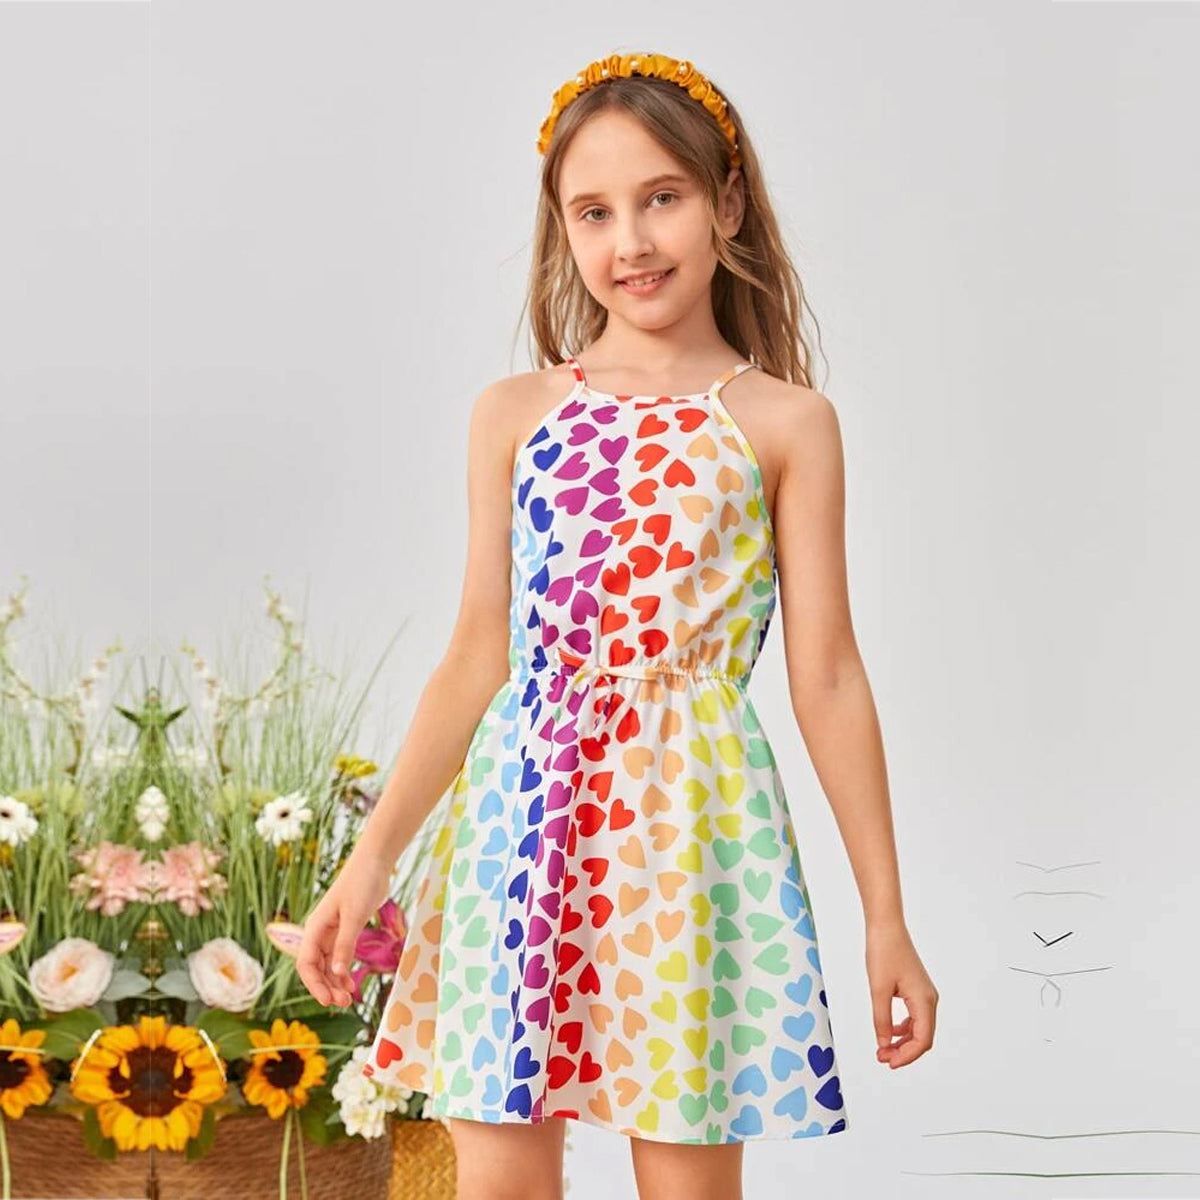 BabyGirl Princess White Button & Multi Hearts designer Tunic Dresses Combo Pack for Baby Girls.